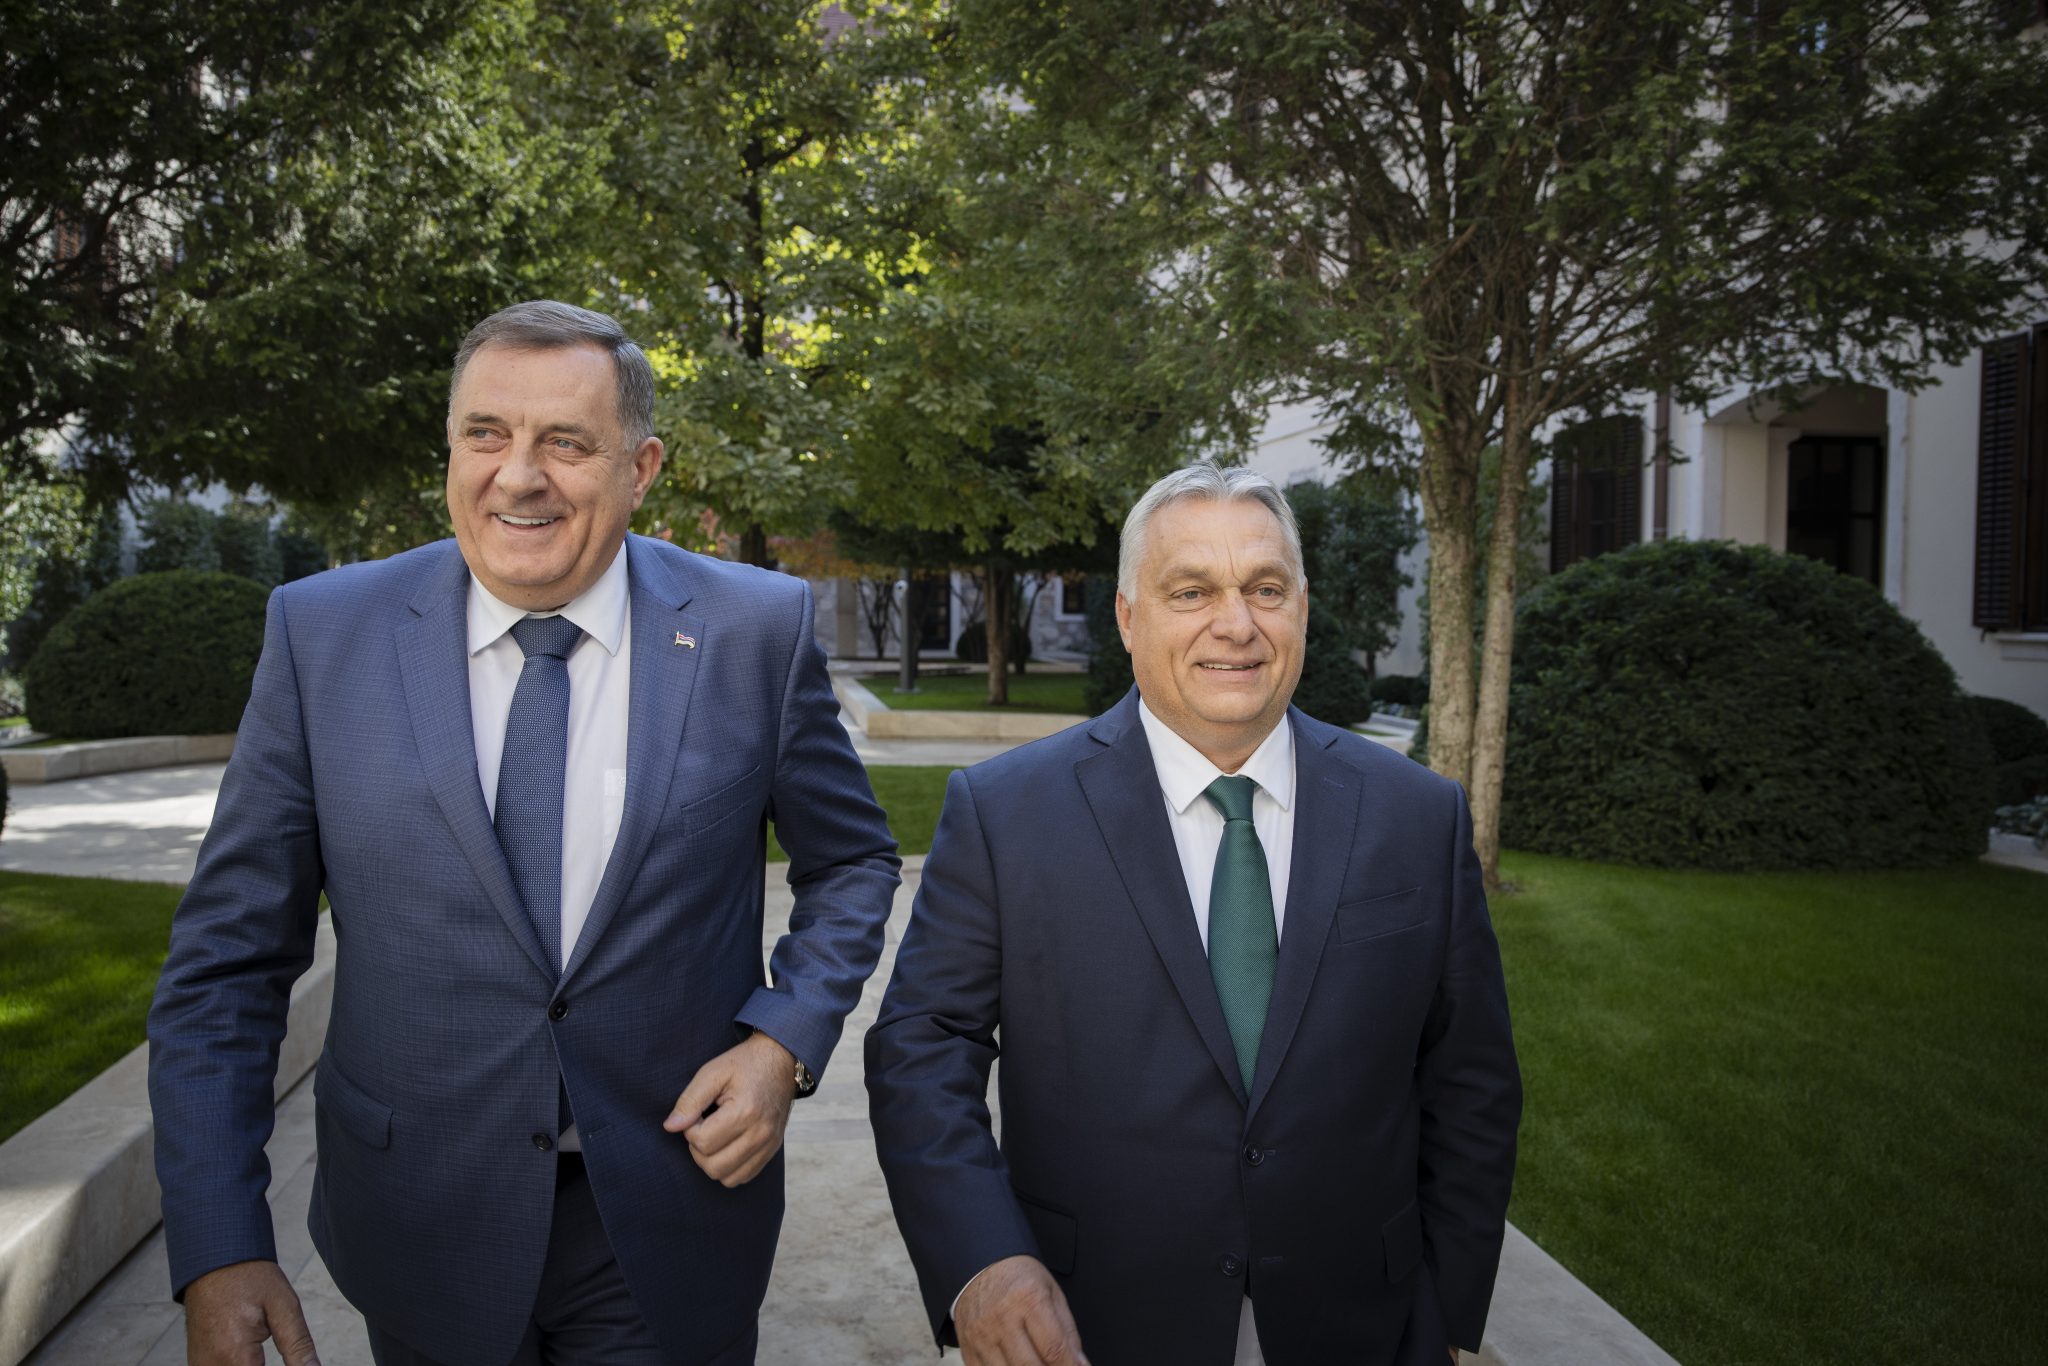 Viktor Orbán Supports the EU Integration of the Western Balkans